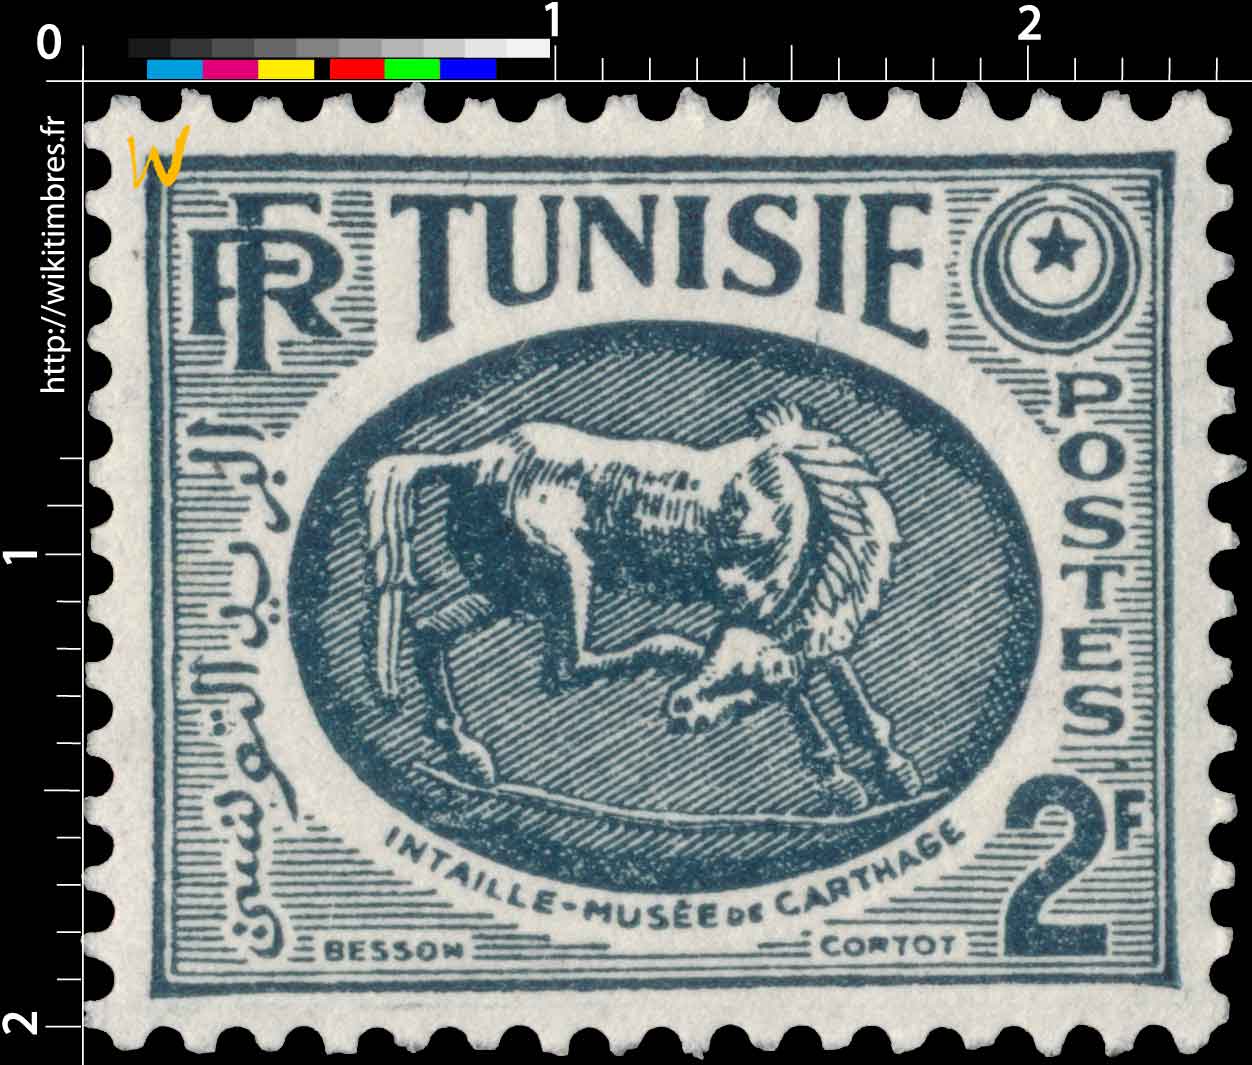 Tunisie - Intaille musée de Carthage